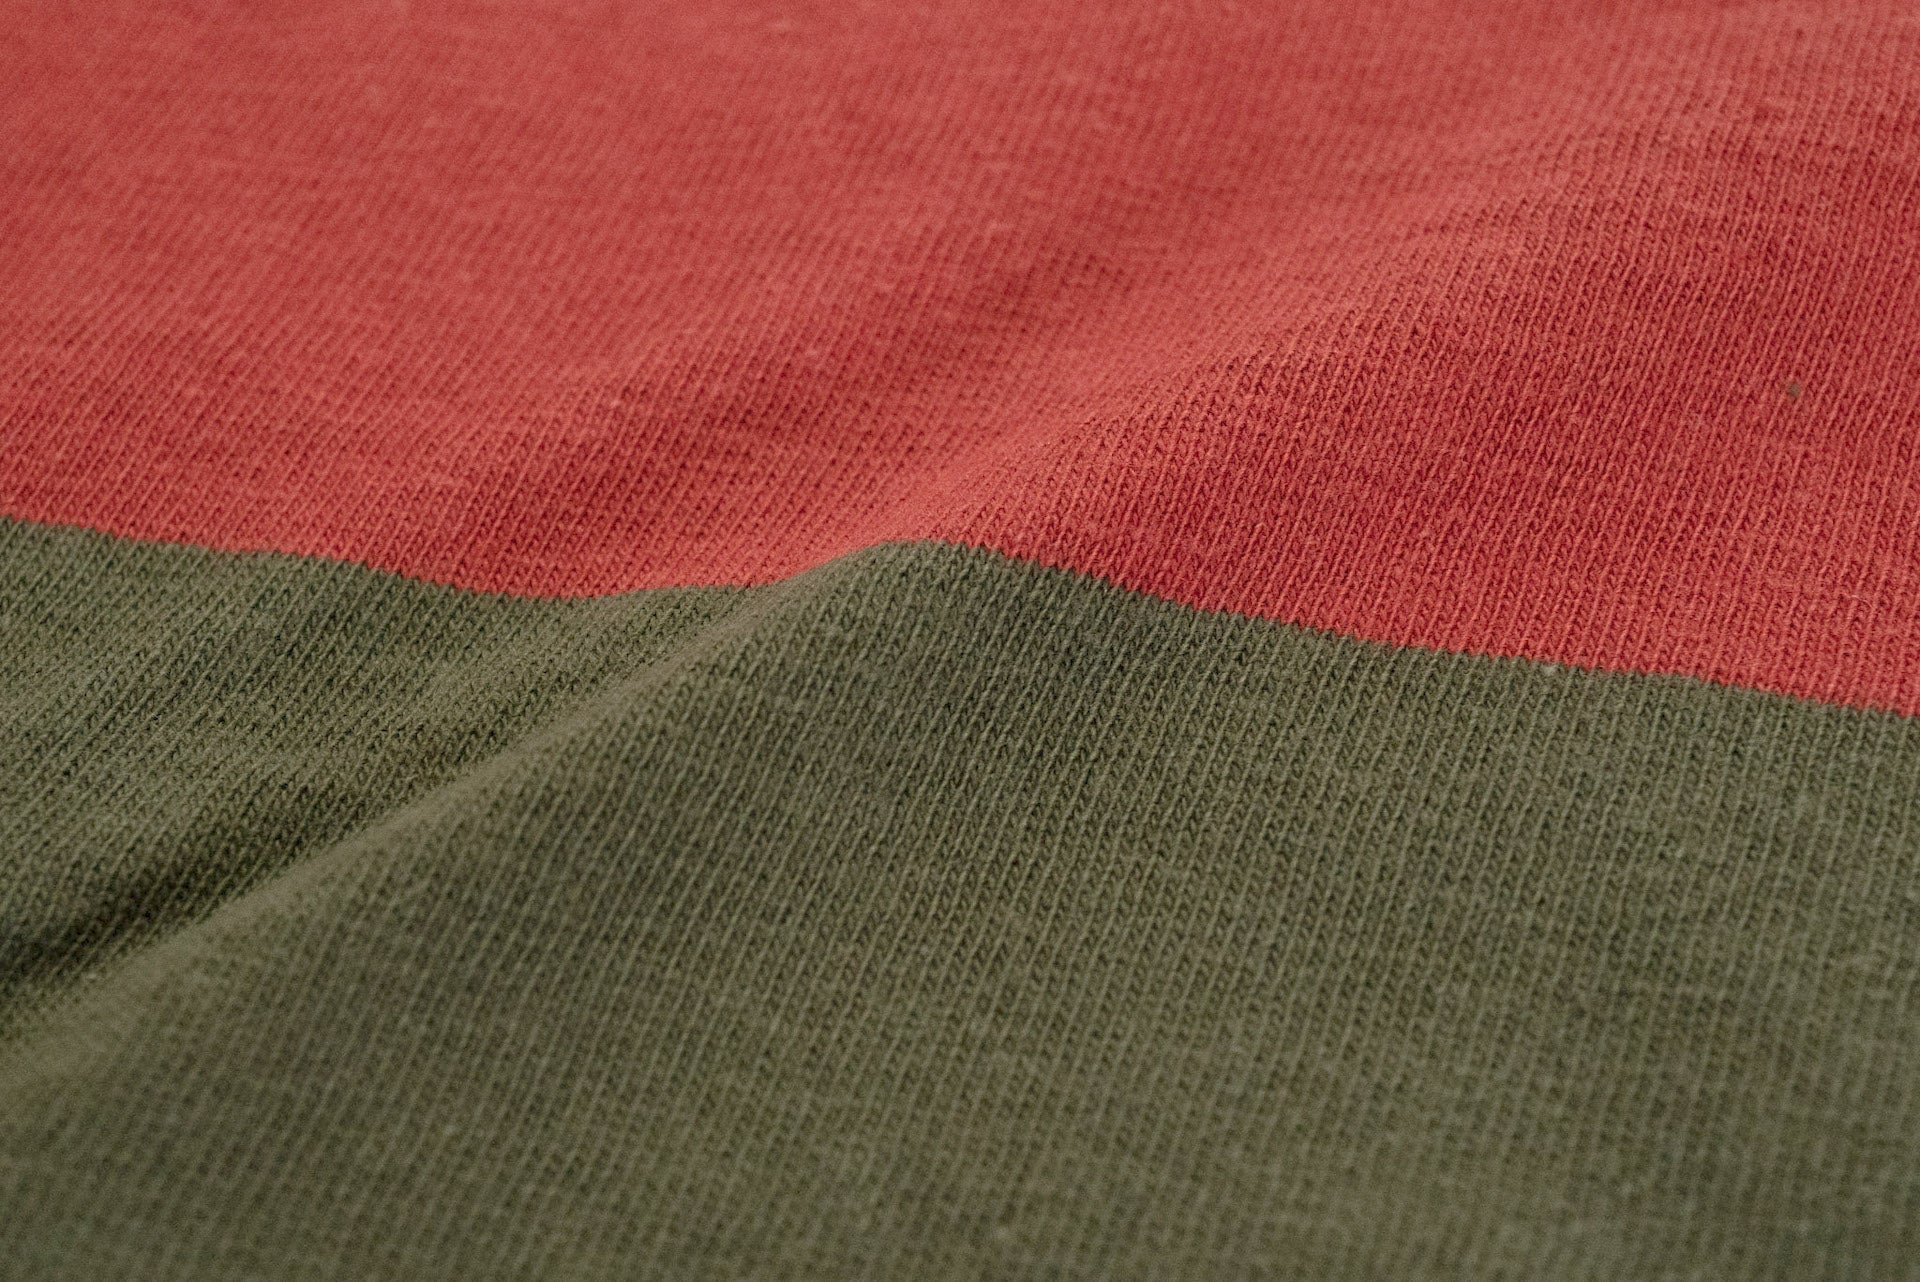 Freewheelers 6.5oz "Horizontal Striped" L/S Border Tee (Chilli Red X Dark Olive)